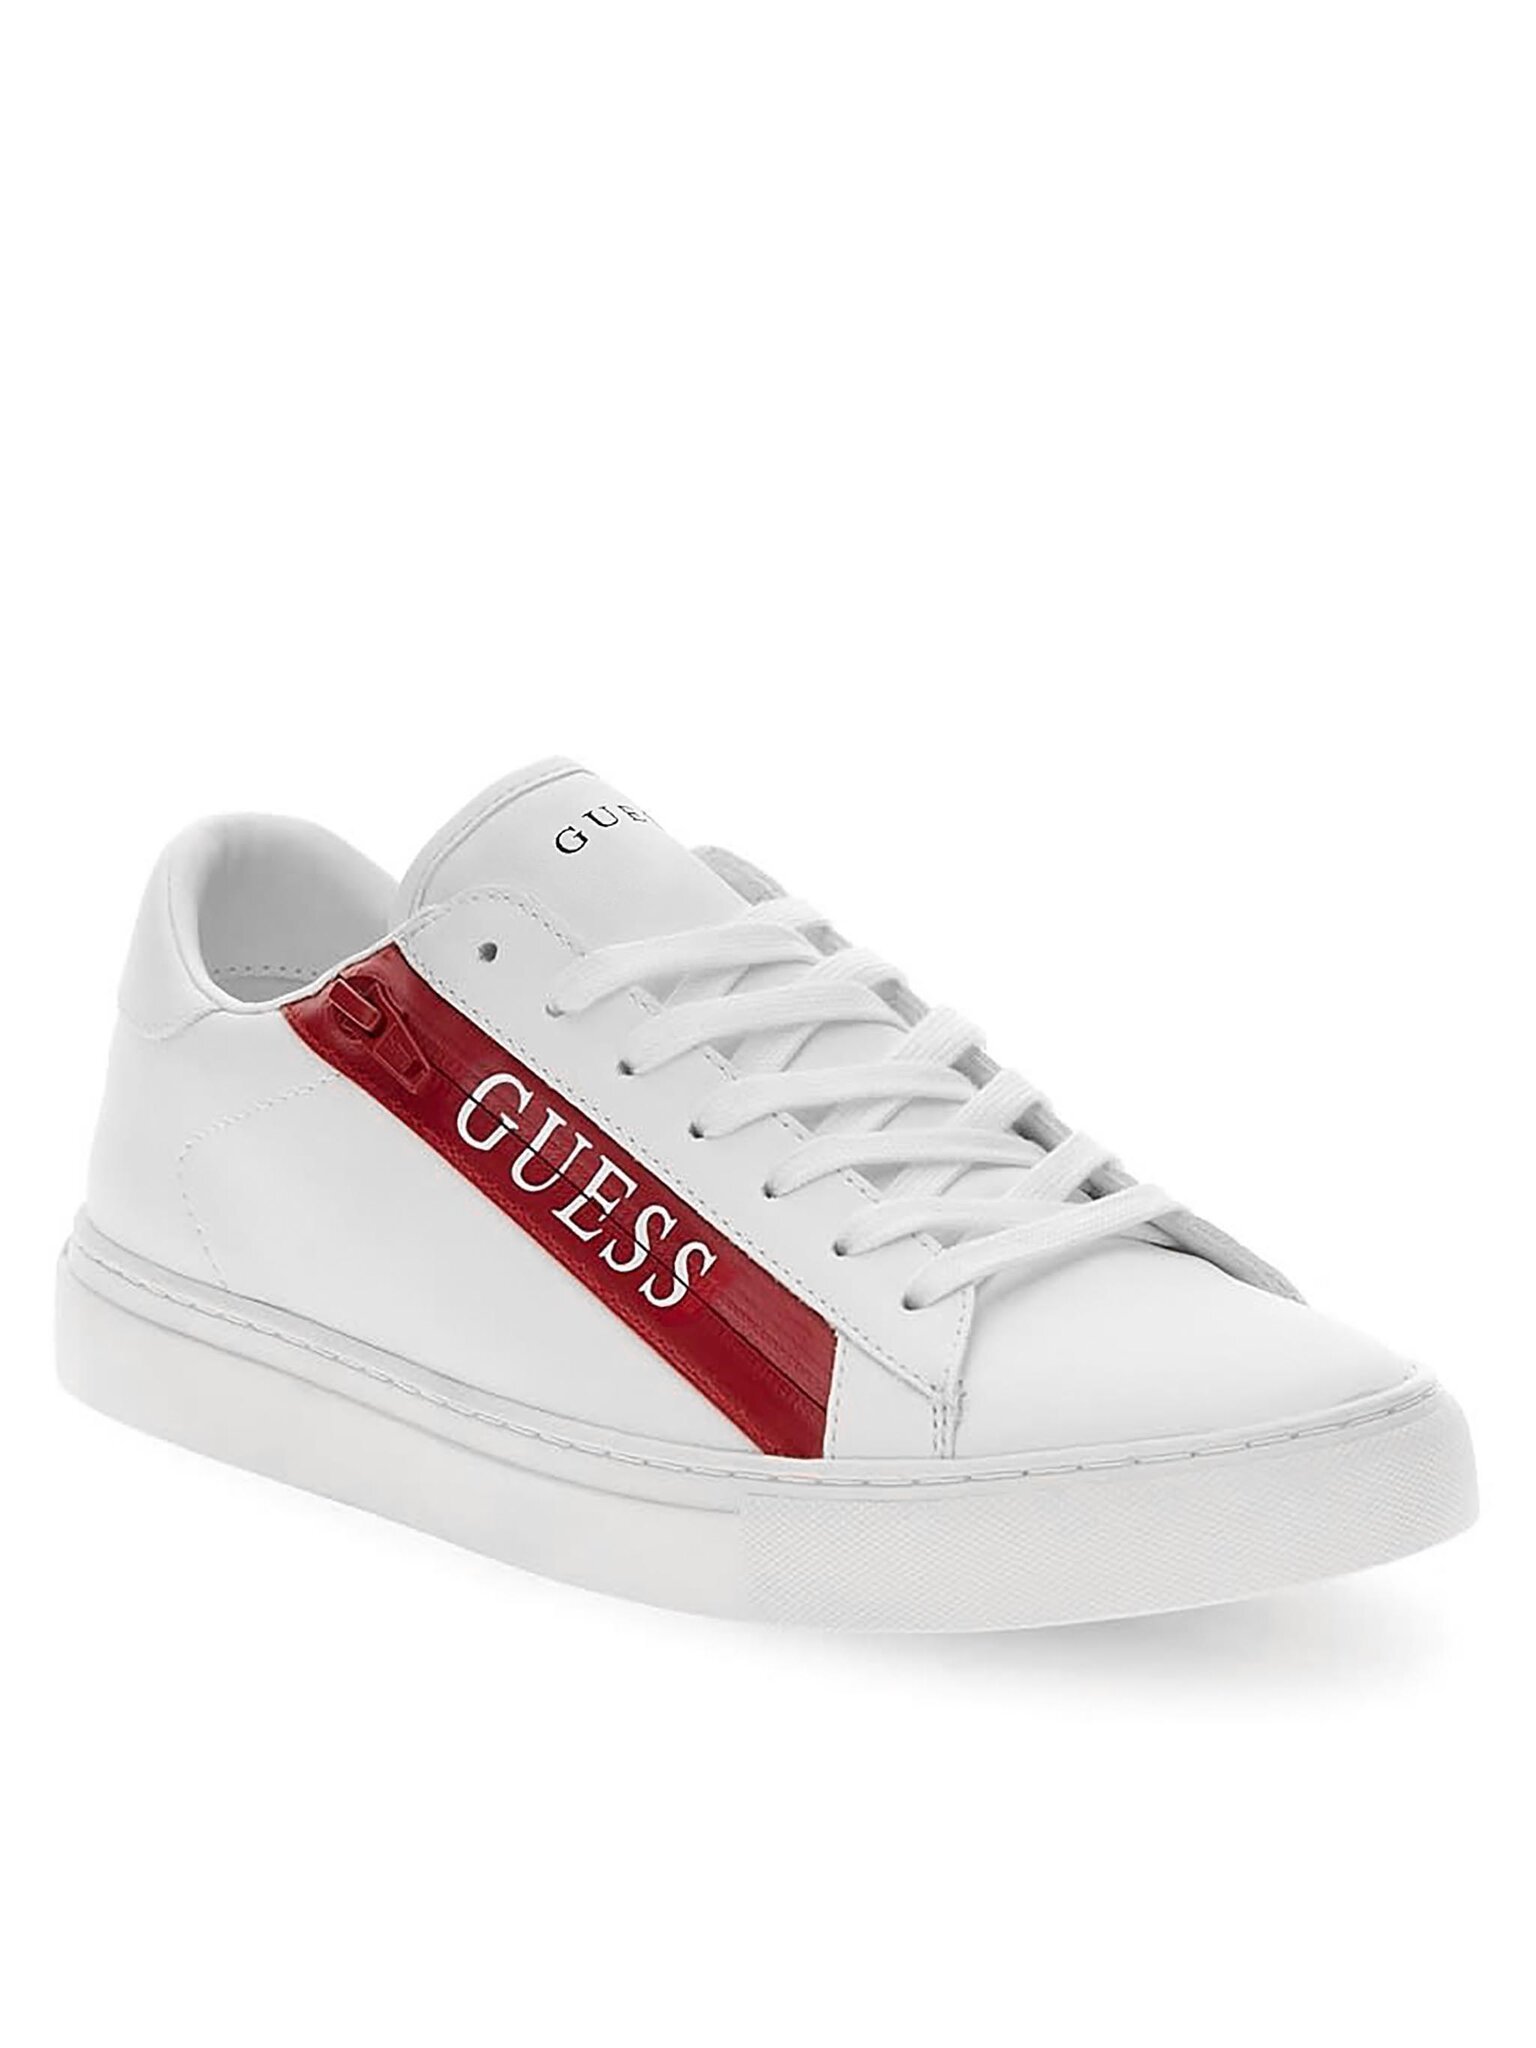 Sneakers / Sport  Guess jeans FM7TIK ELE12 WHITE RED